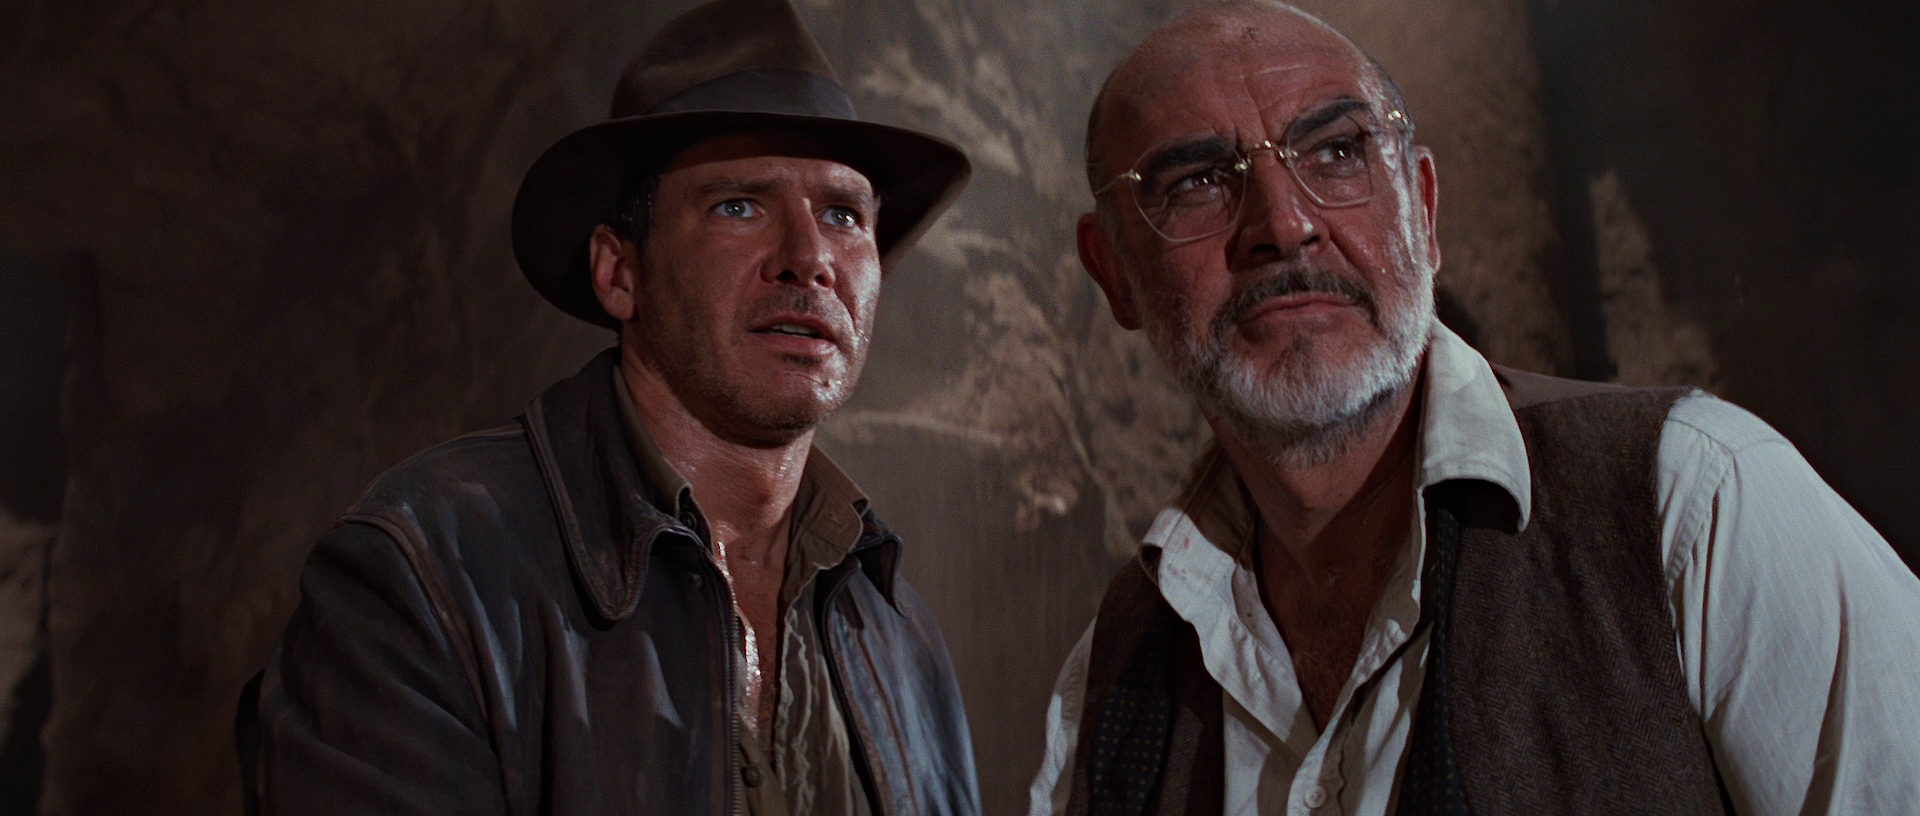 Indiana Jones Sean Connery